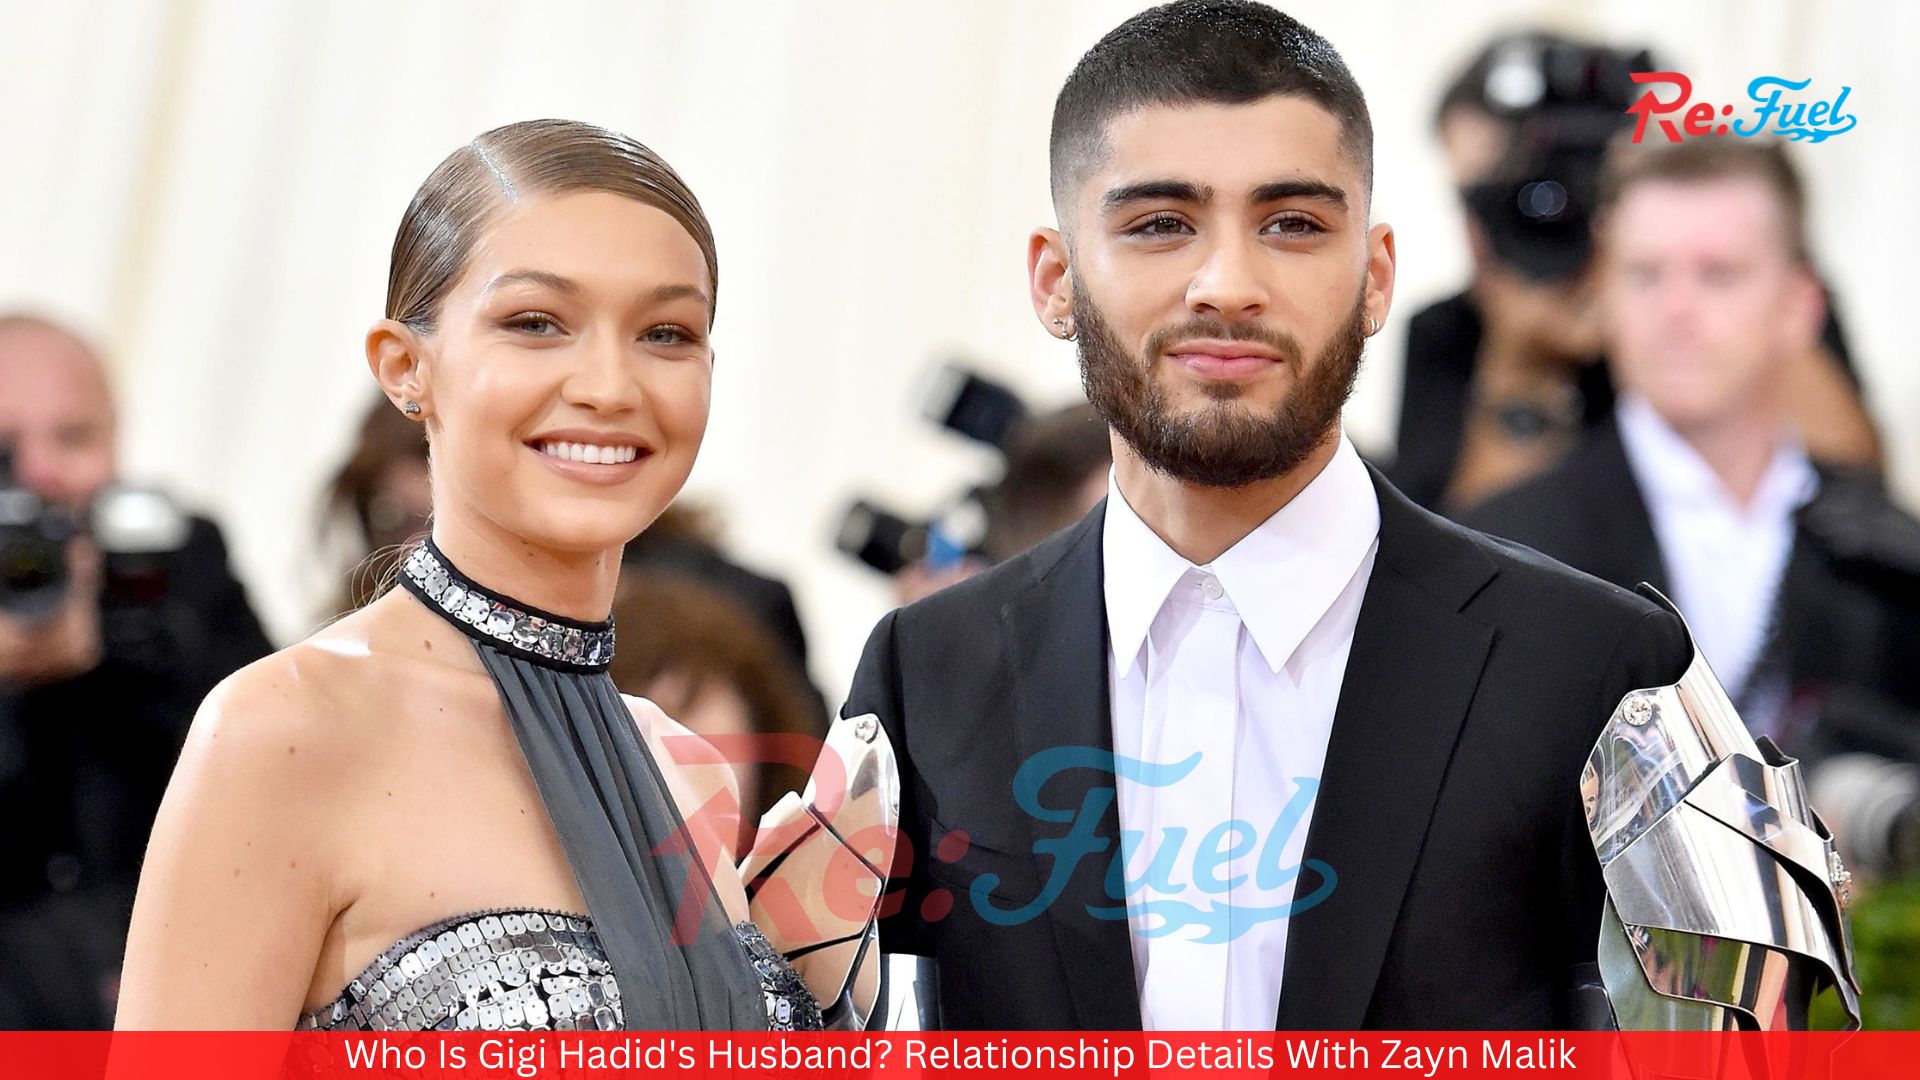 Who Is Gigi Hadid's Husband? Relationship Details With Zayn Malik